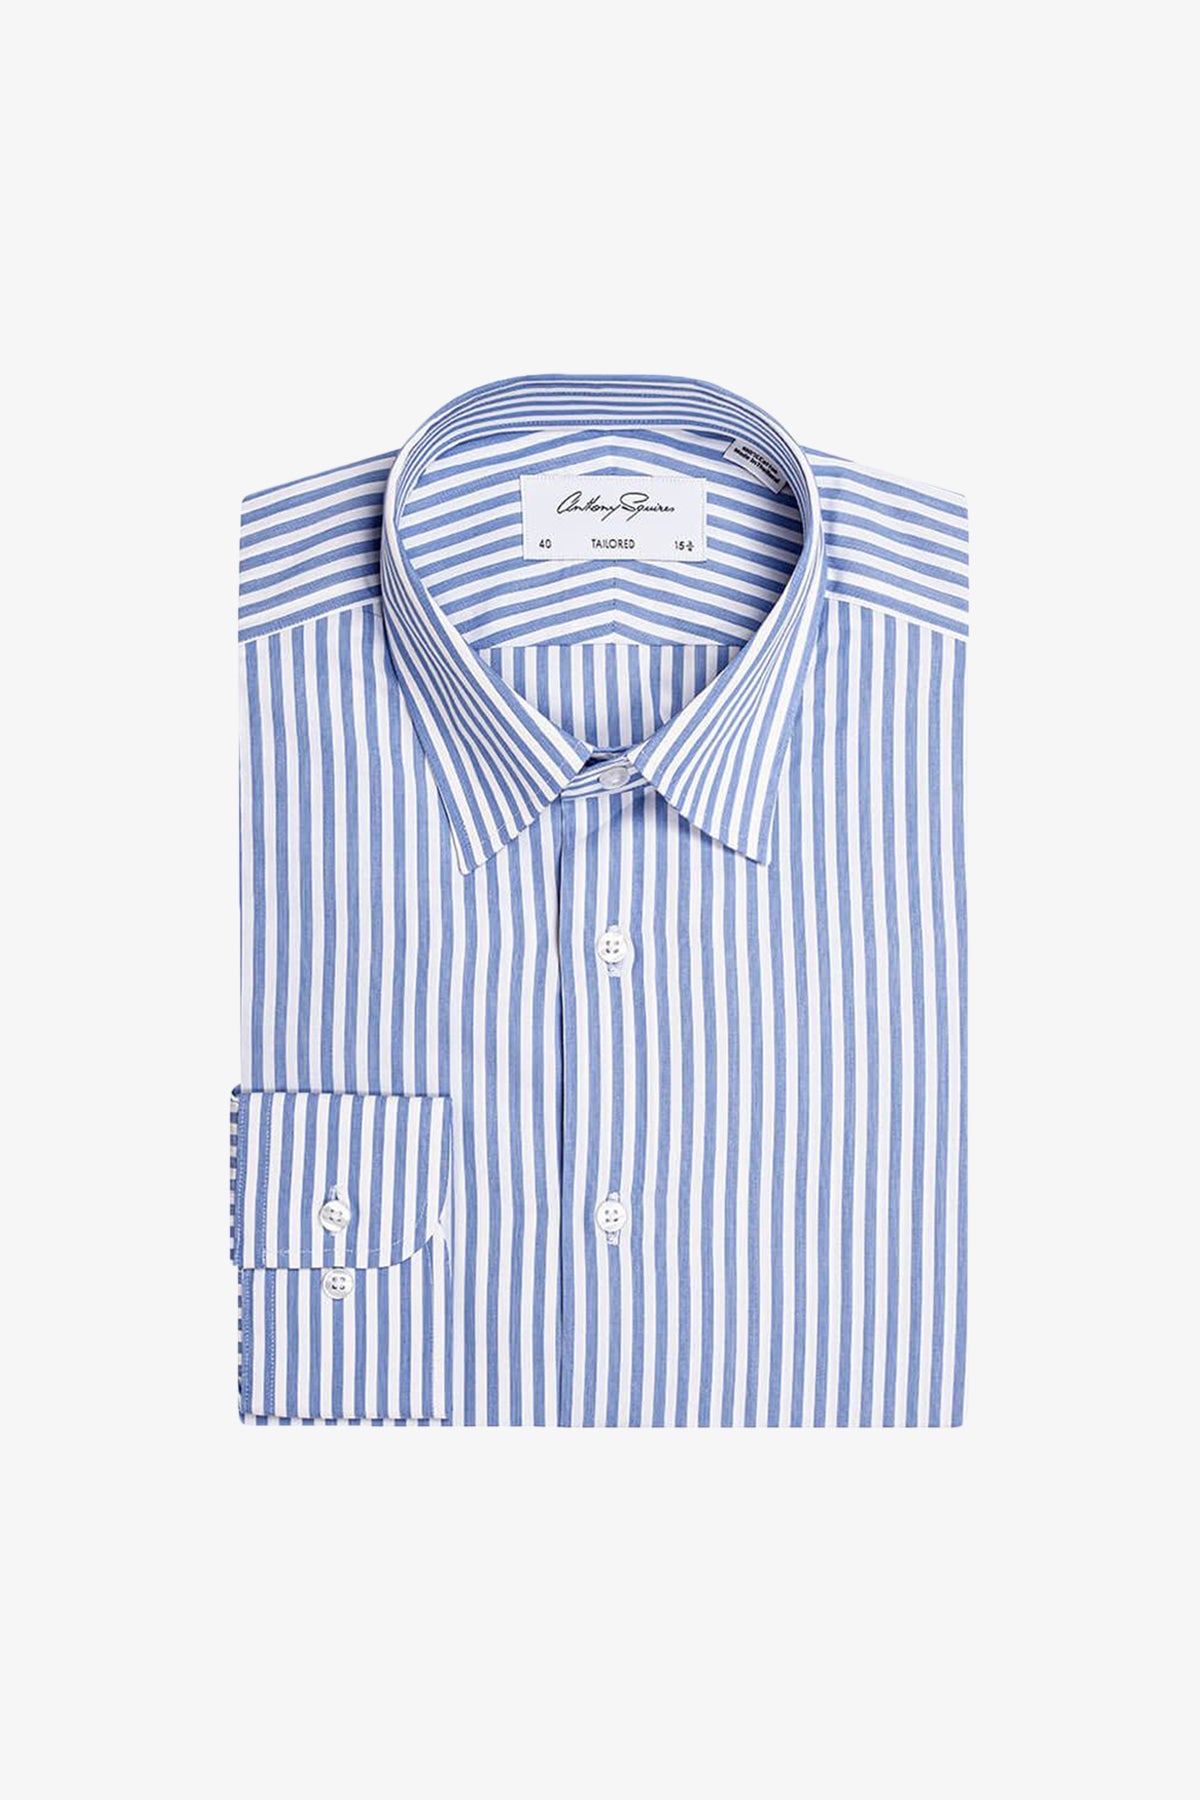 Norris - Blue stripe Shirt